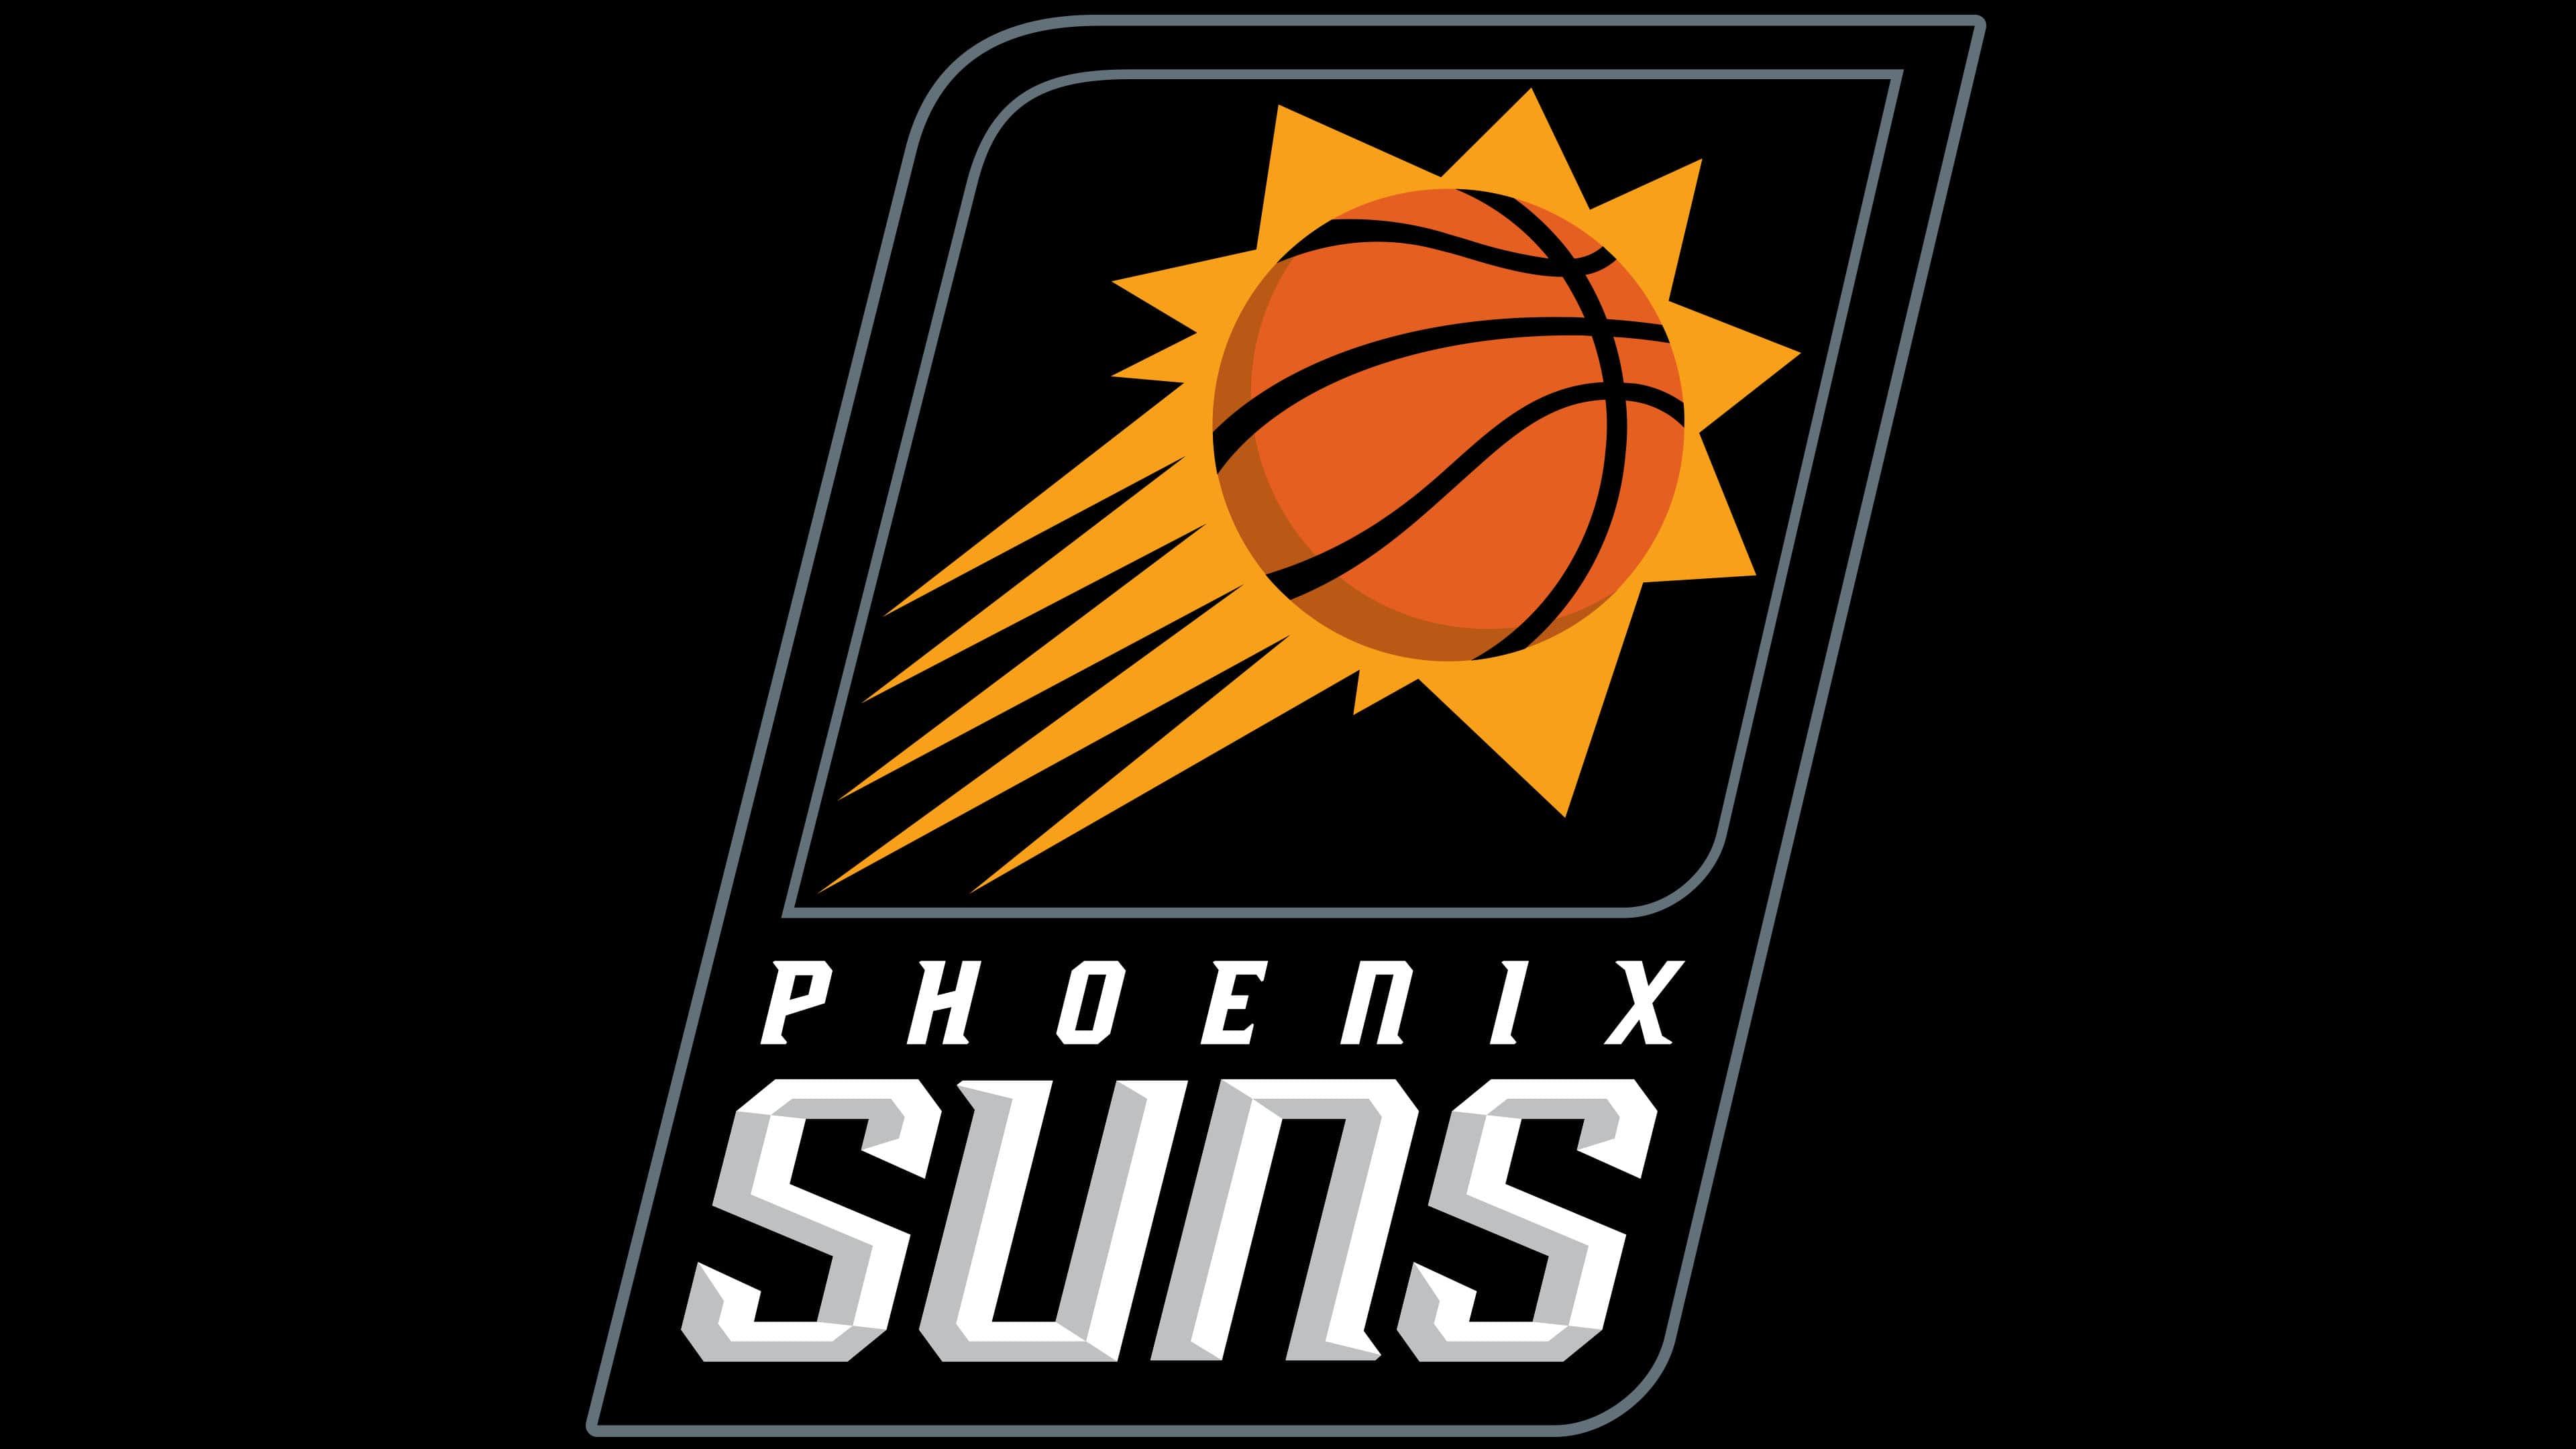 Quanto vale o Phoenix Suns?